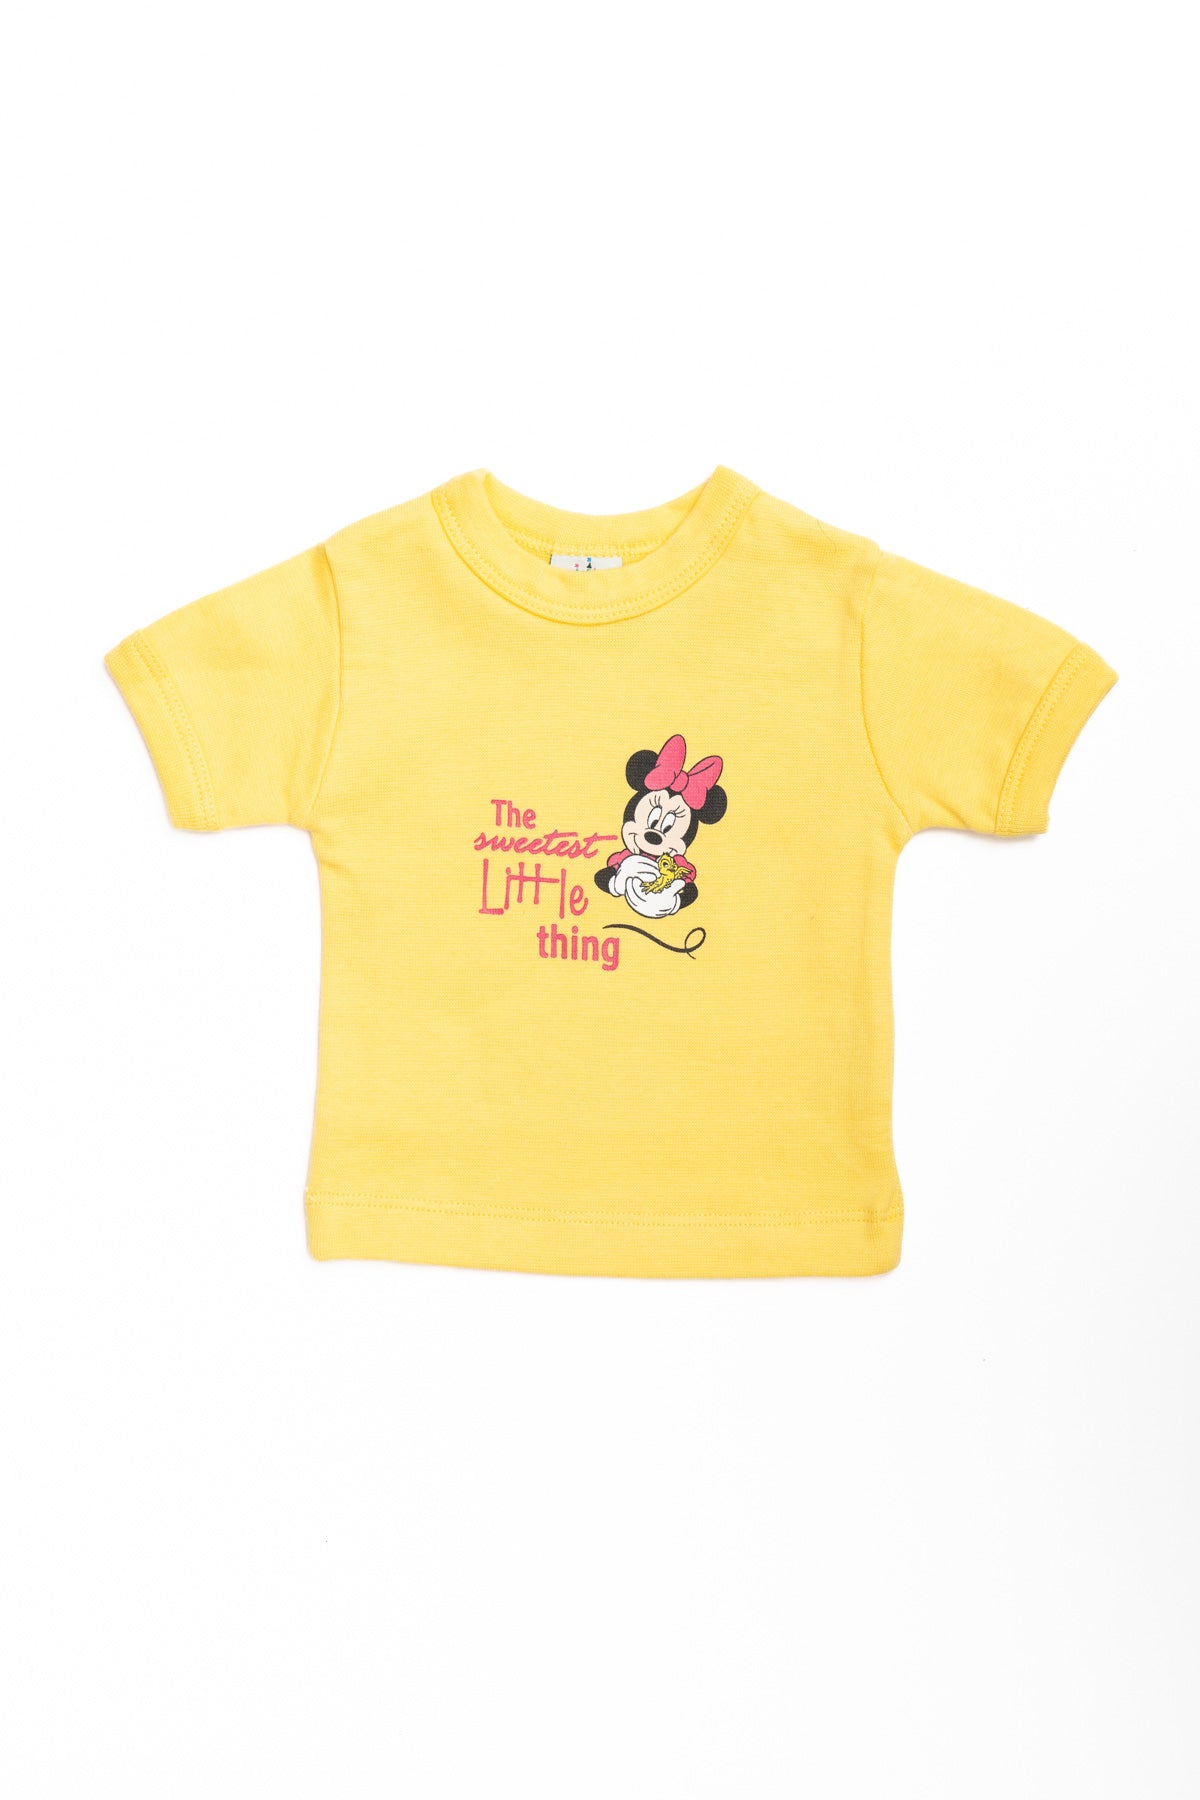 T-Shirt Baby Minnie " The Sweetest" Half sleeve 4900